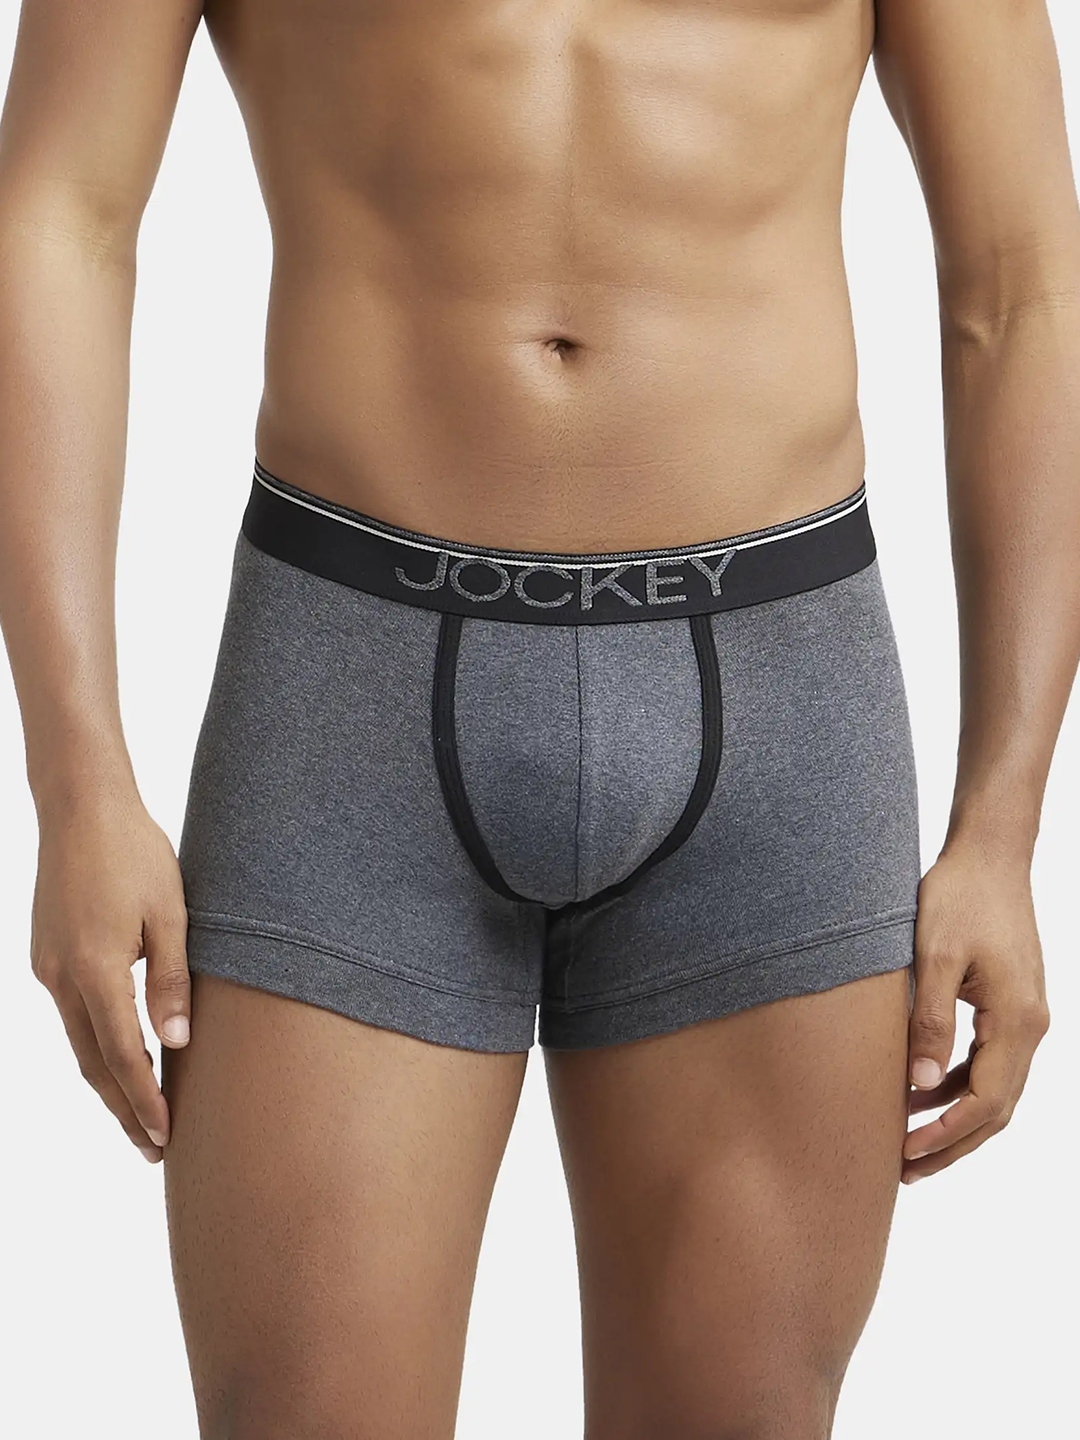 Pure Cotton Trunks Jockey Men Underwear at Rs 400/piece in Hapur